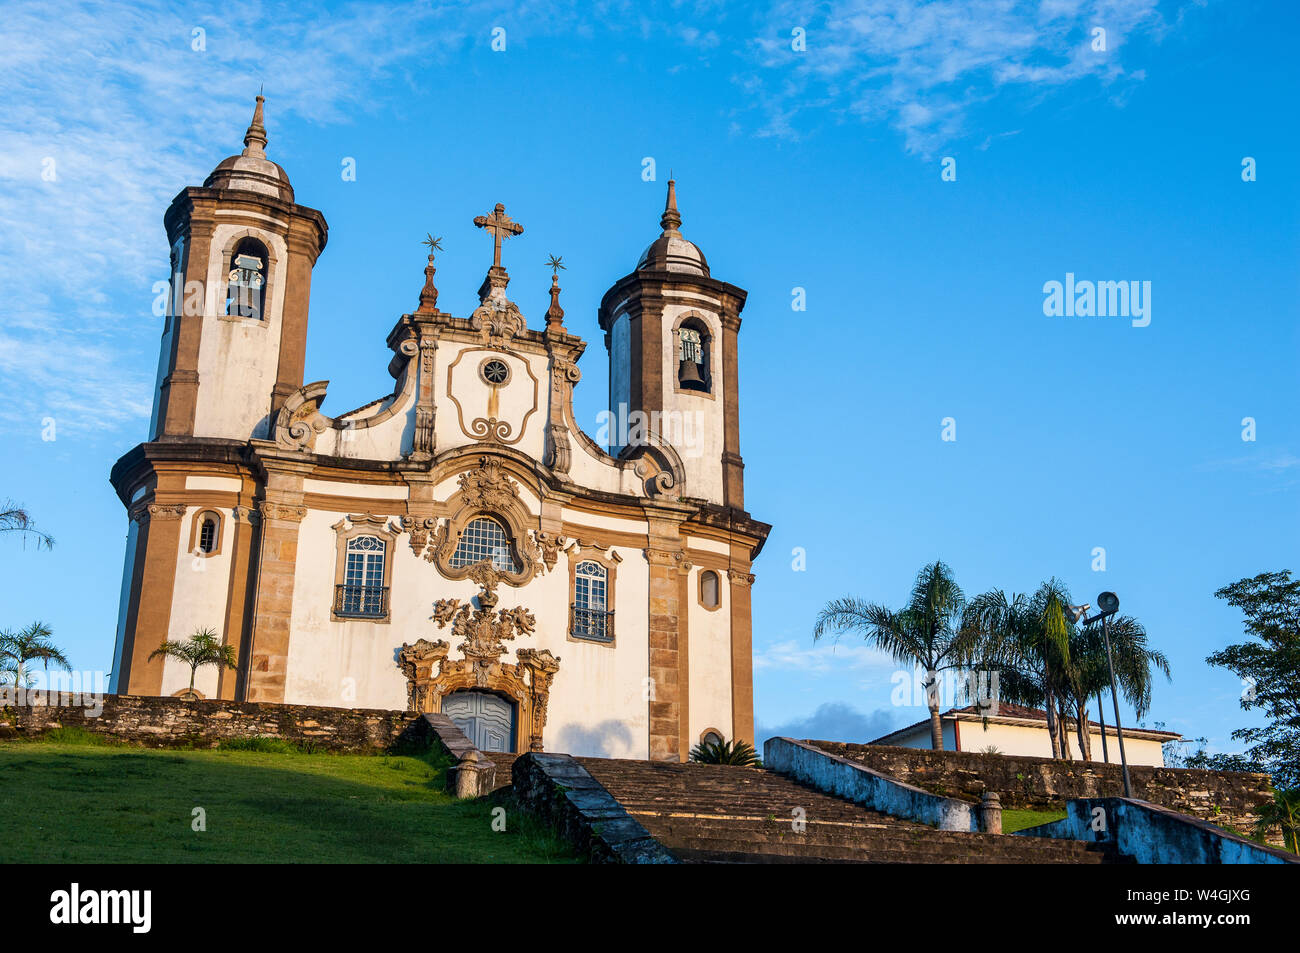 Nossa Senhora do Carmo church in Outo Preto, Minas Gerais, Brazil Stock Photo